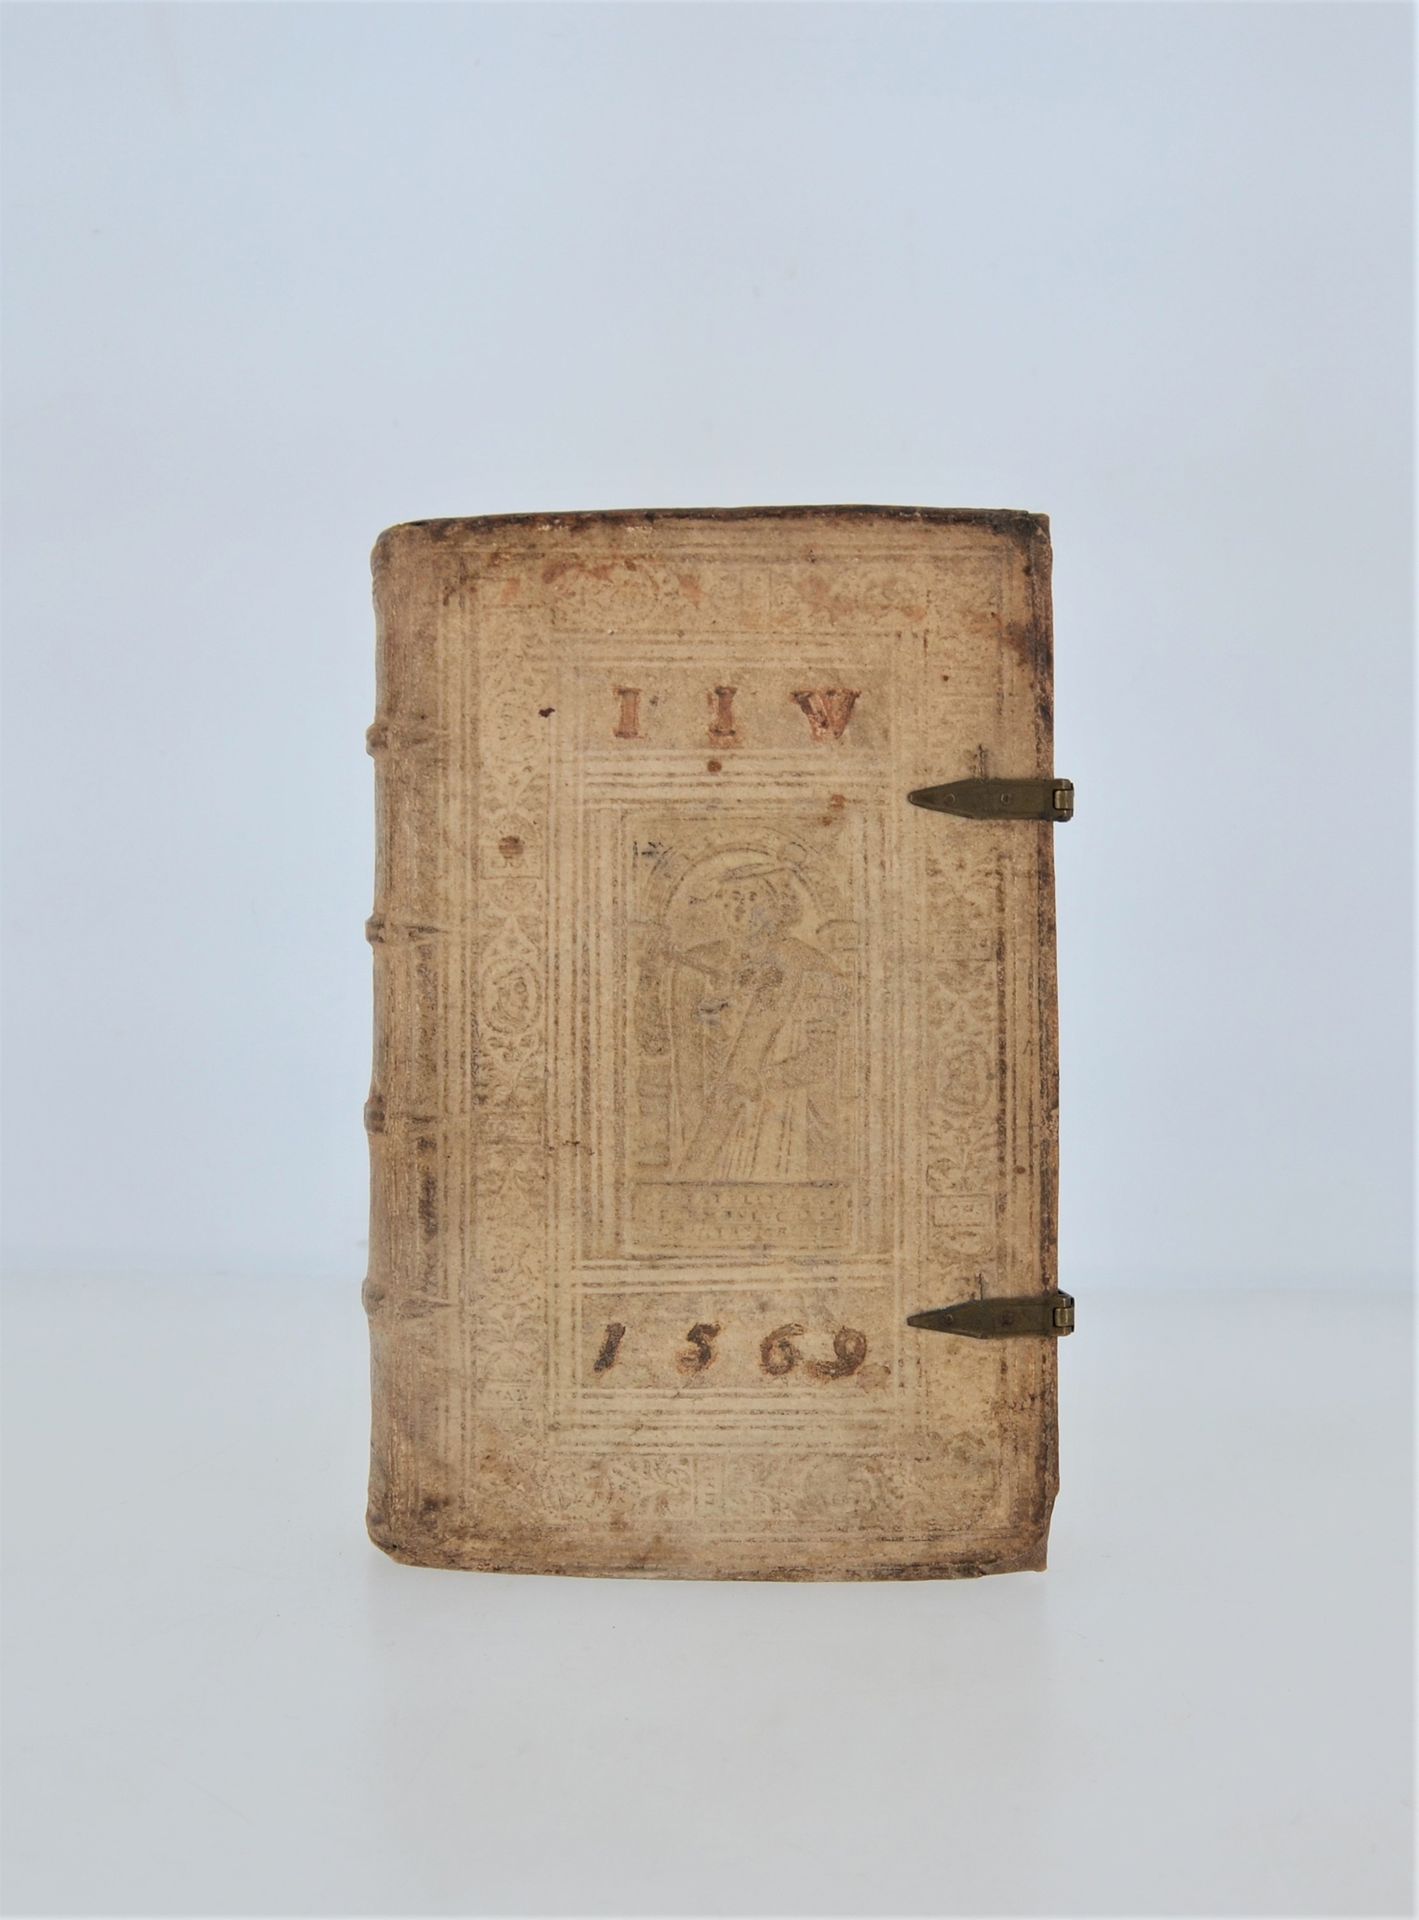 JUSTINIEN Ier. Institutionum libri IIII. Lyon, Antoine Vincent, 1568. In-8, peau&hellip;